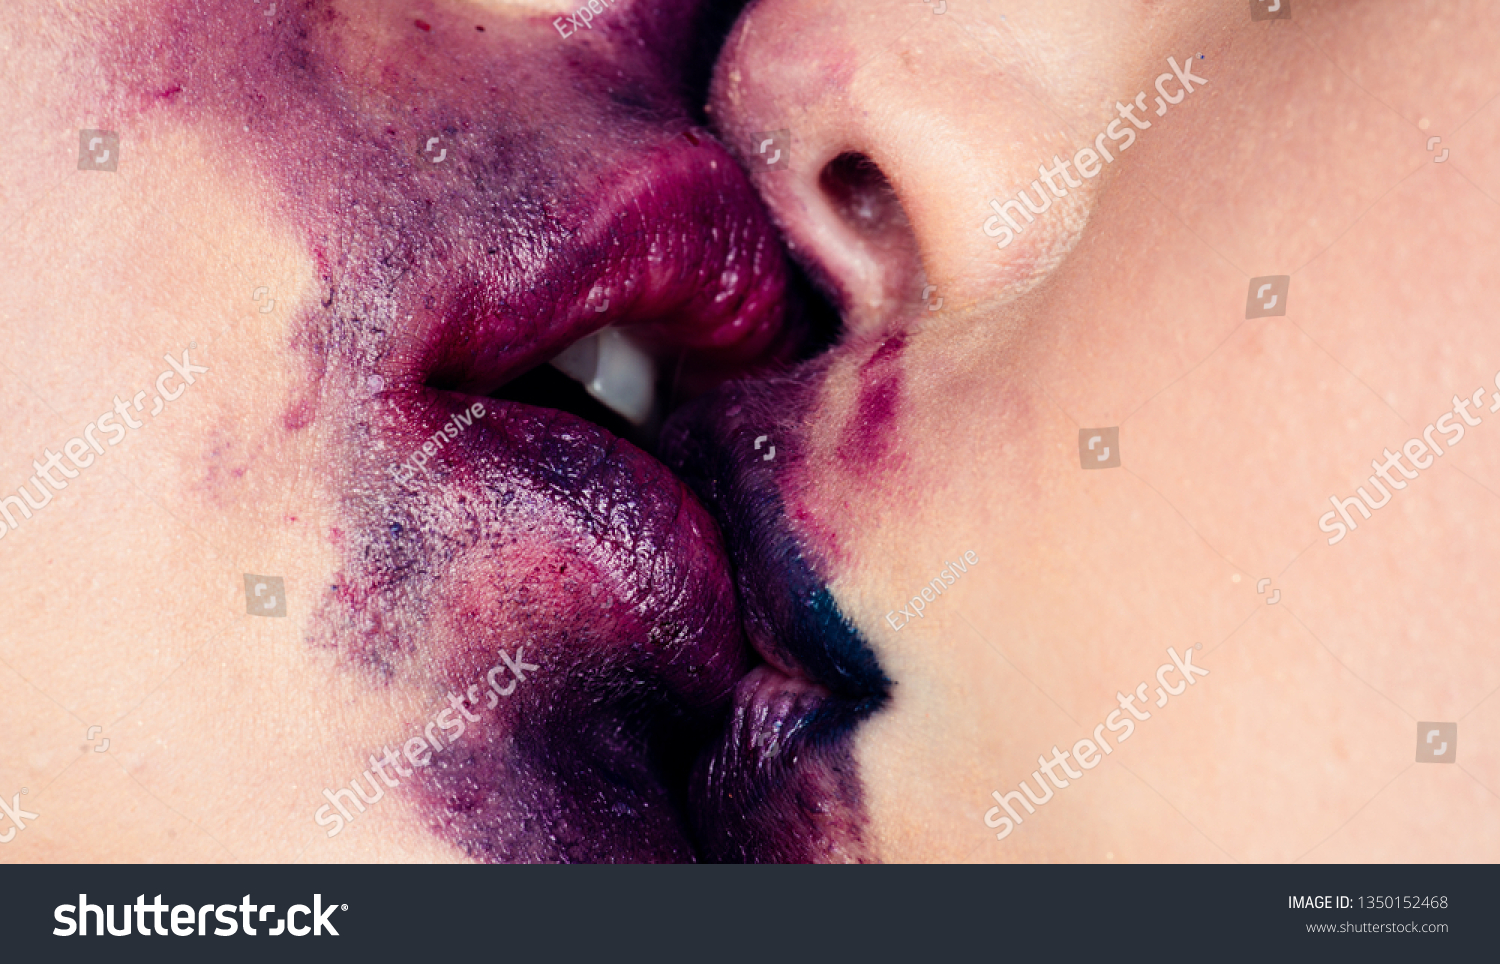 Lipstick Lesbian Couples